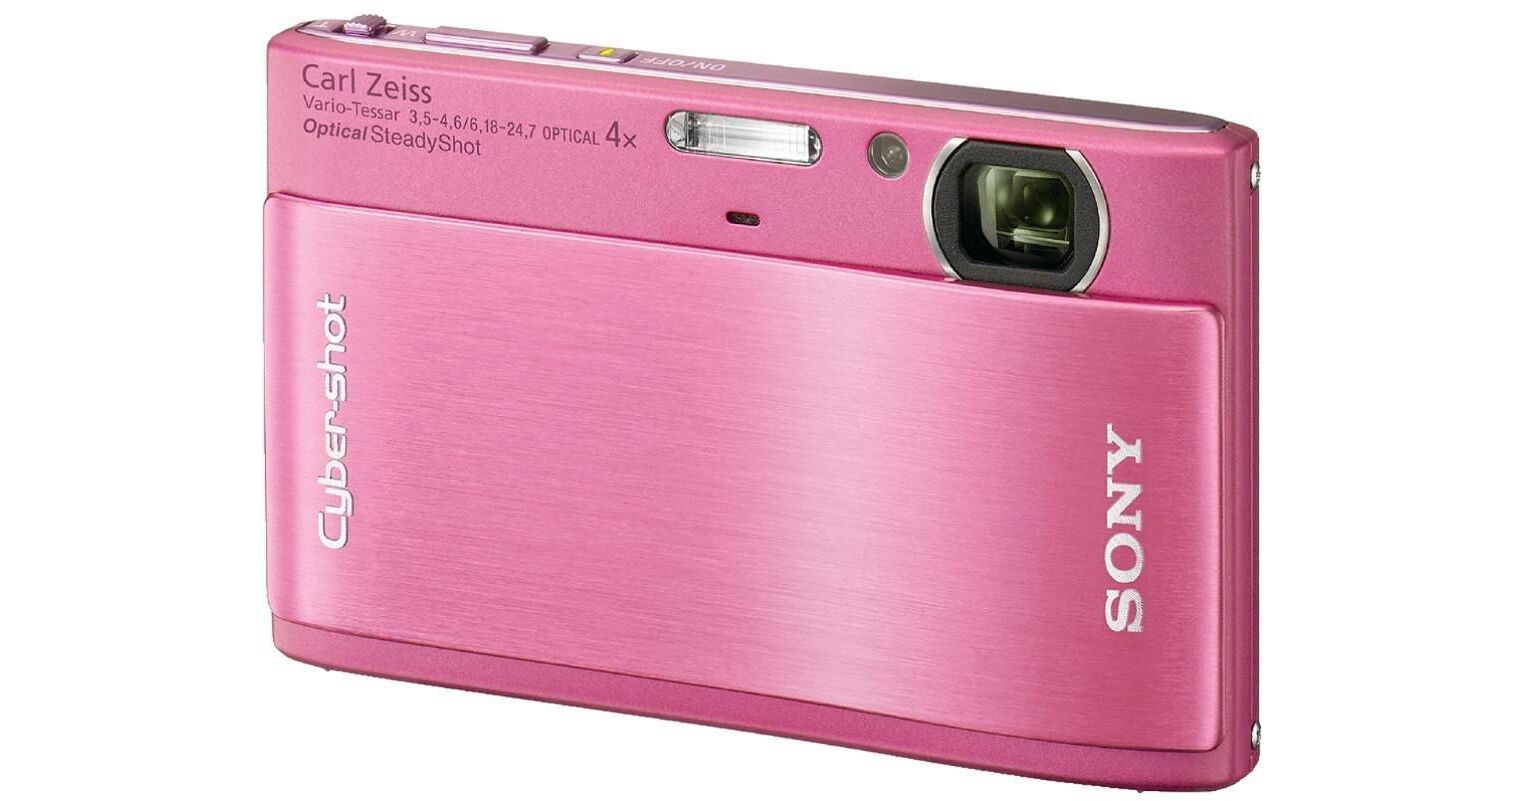 Sony DSC-TX1 Cybershot Digital Camera (Pink) DSCTX1P B&H Photo